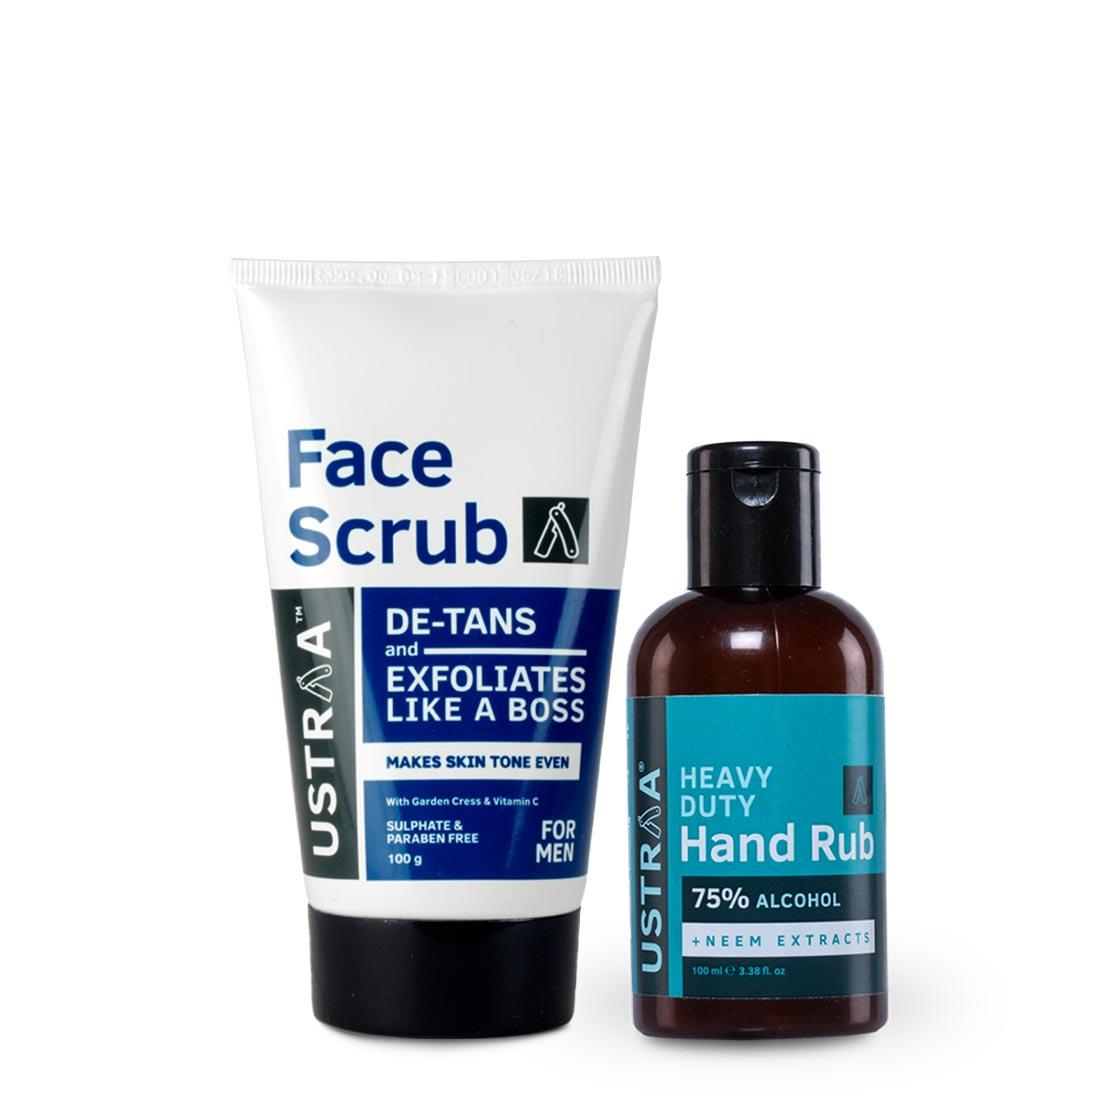 Face Scrub De-tan and Hand Rub